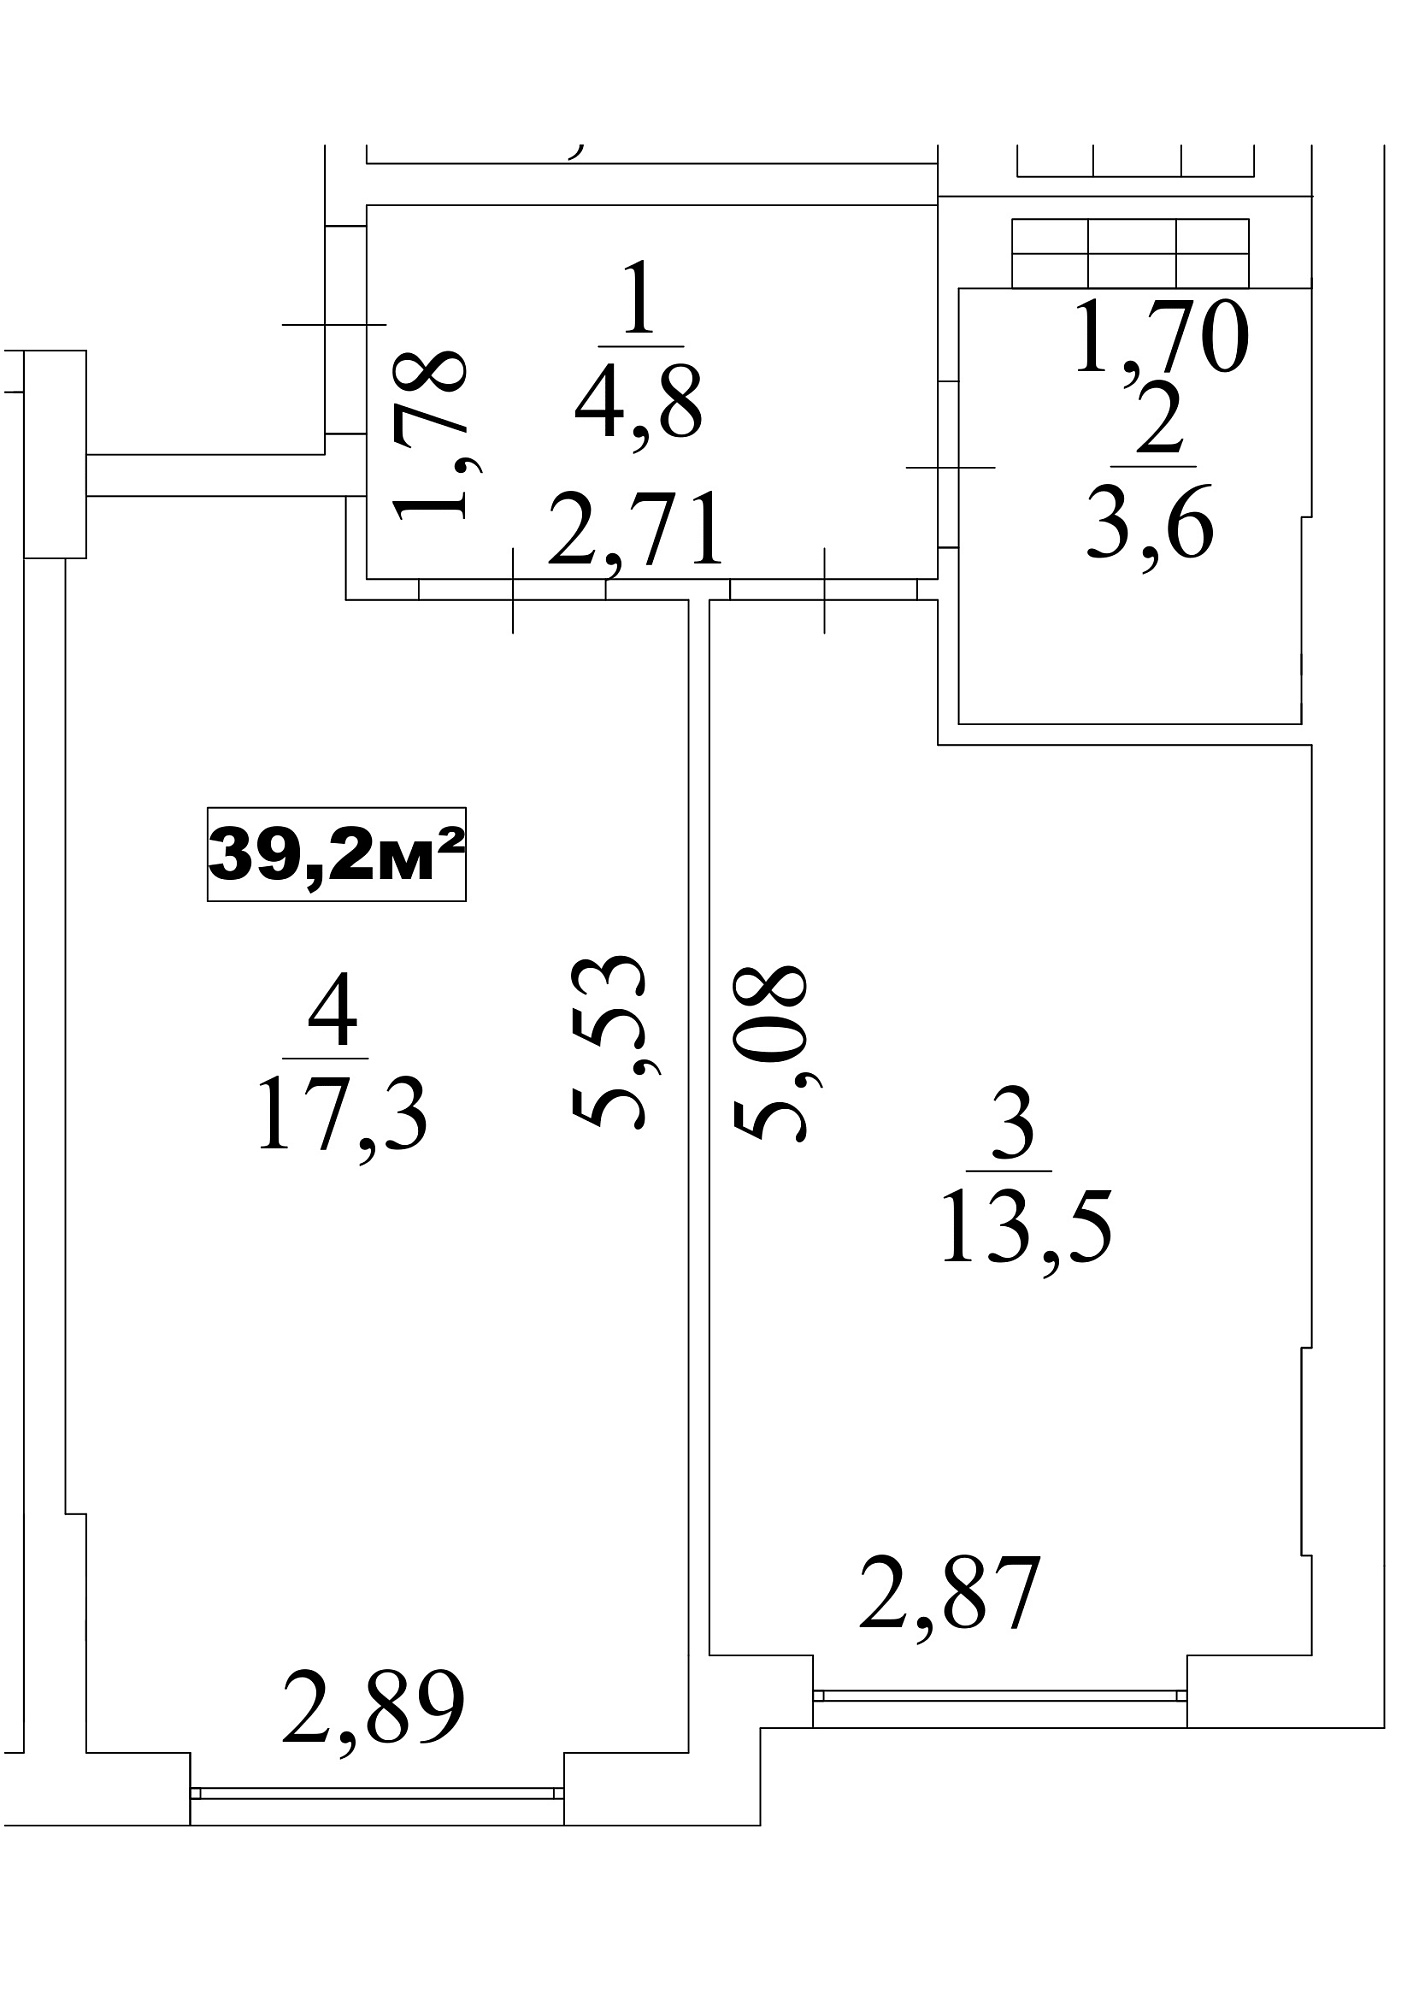 Planning 1-rm flats area 39.2m2, AB-10-08/0070в.